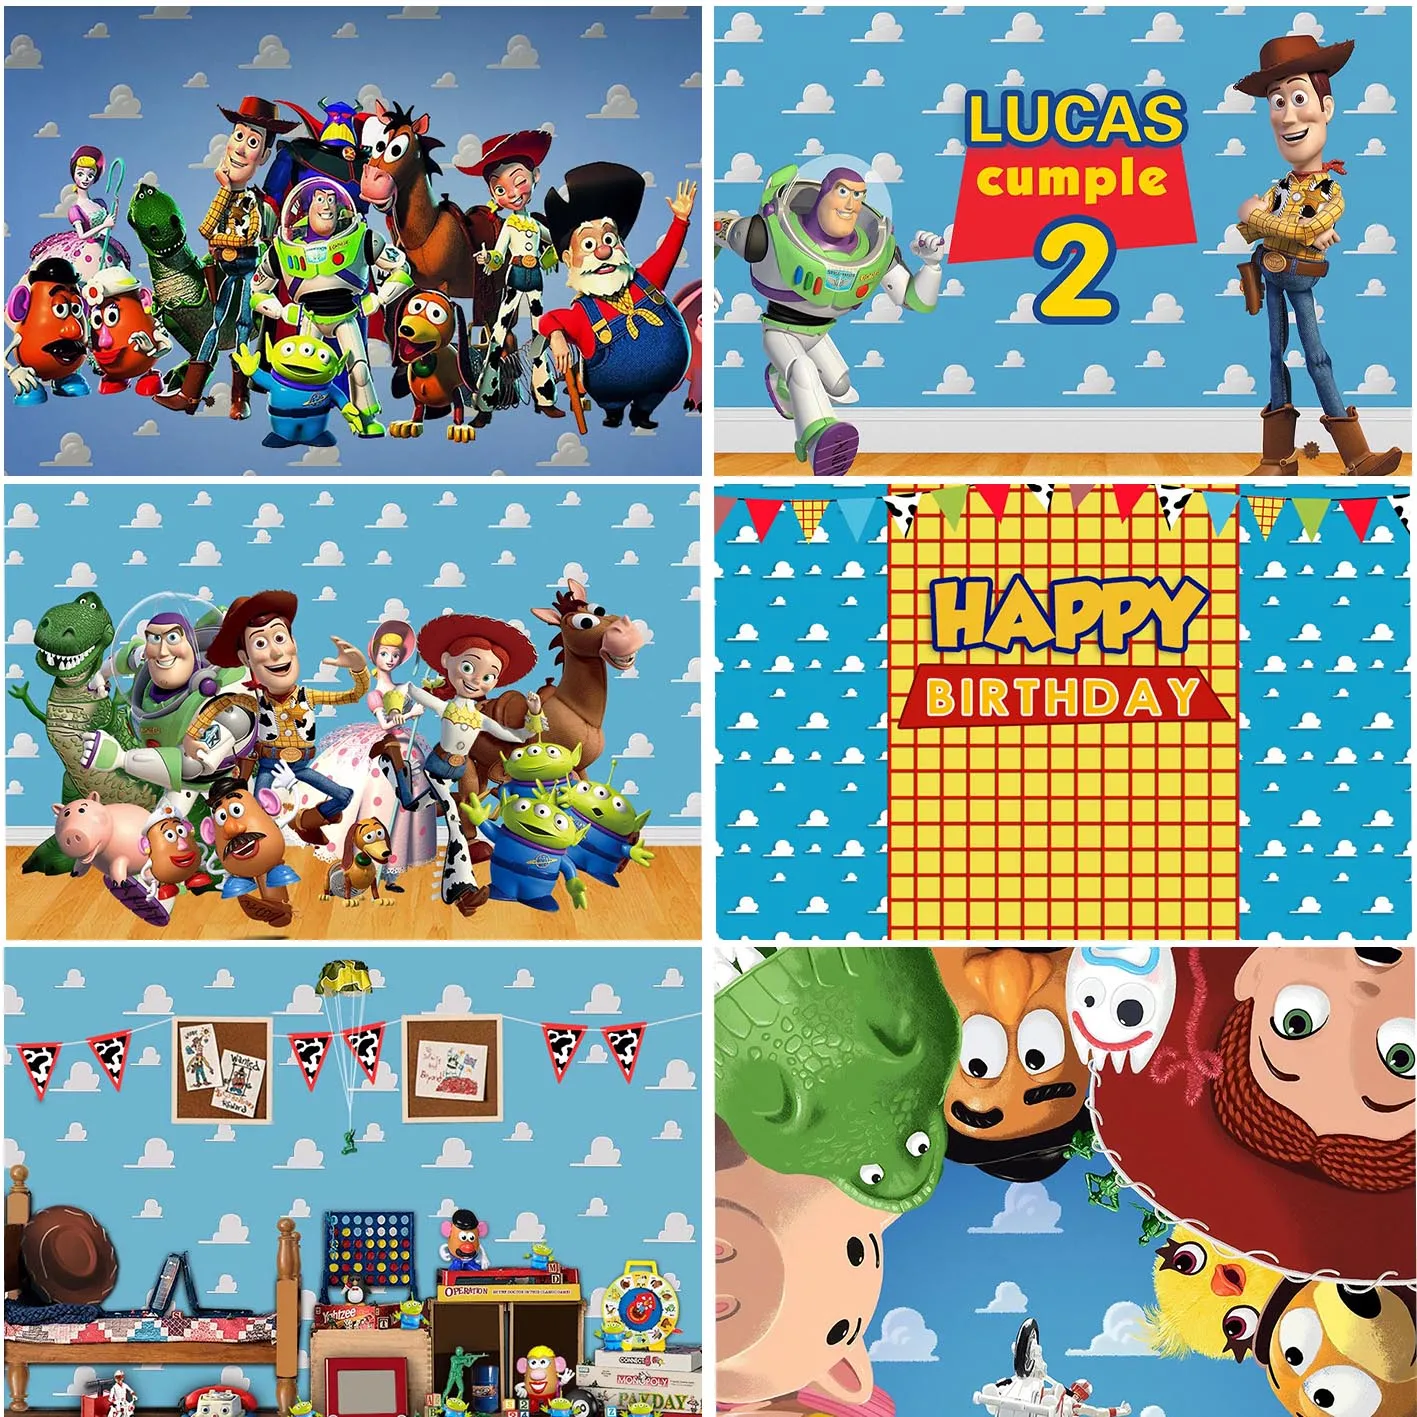 

Disney Cartoon Toy Story Blue Sky Wooden Floor Theme Background For Boys Birthday Party Baby Shower Decoration Custom Backdrops